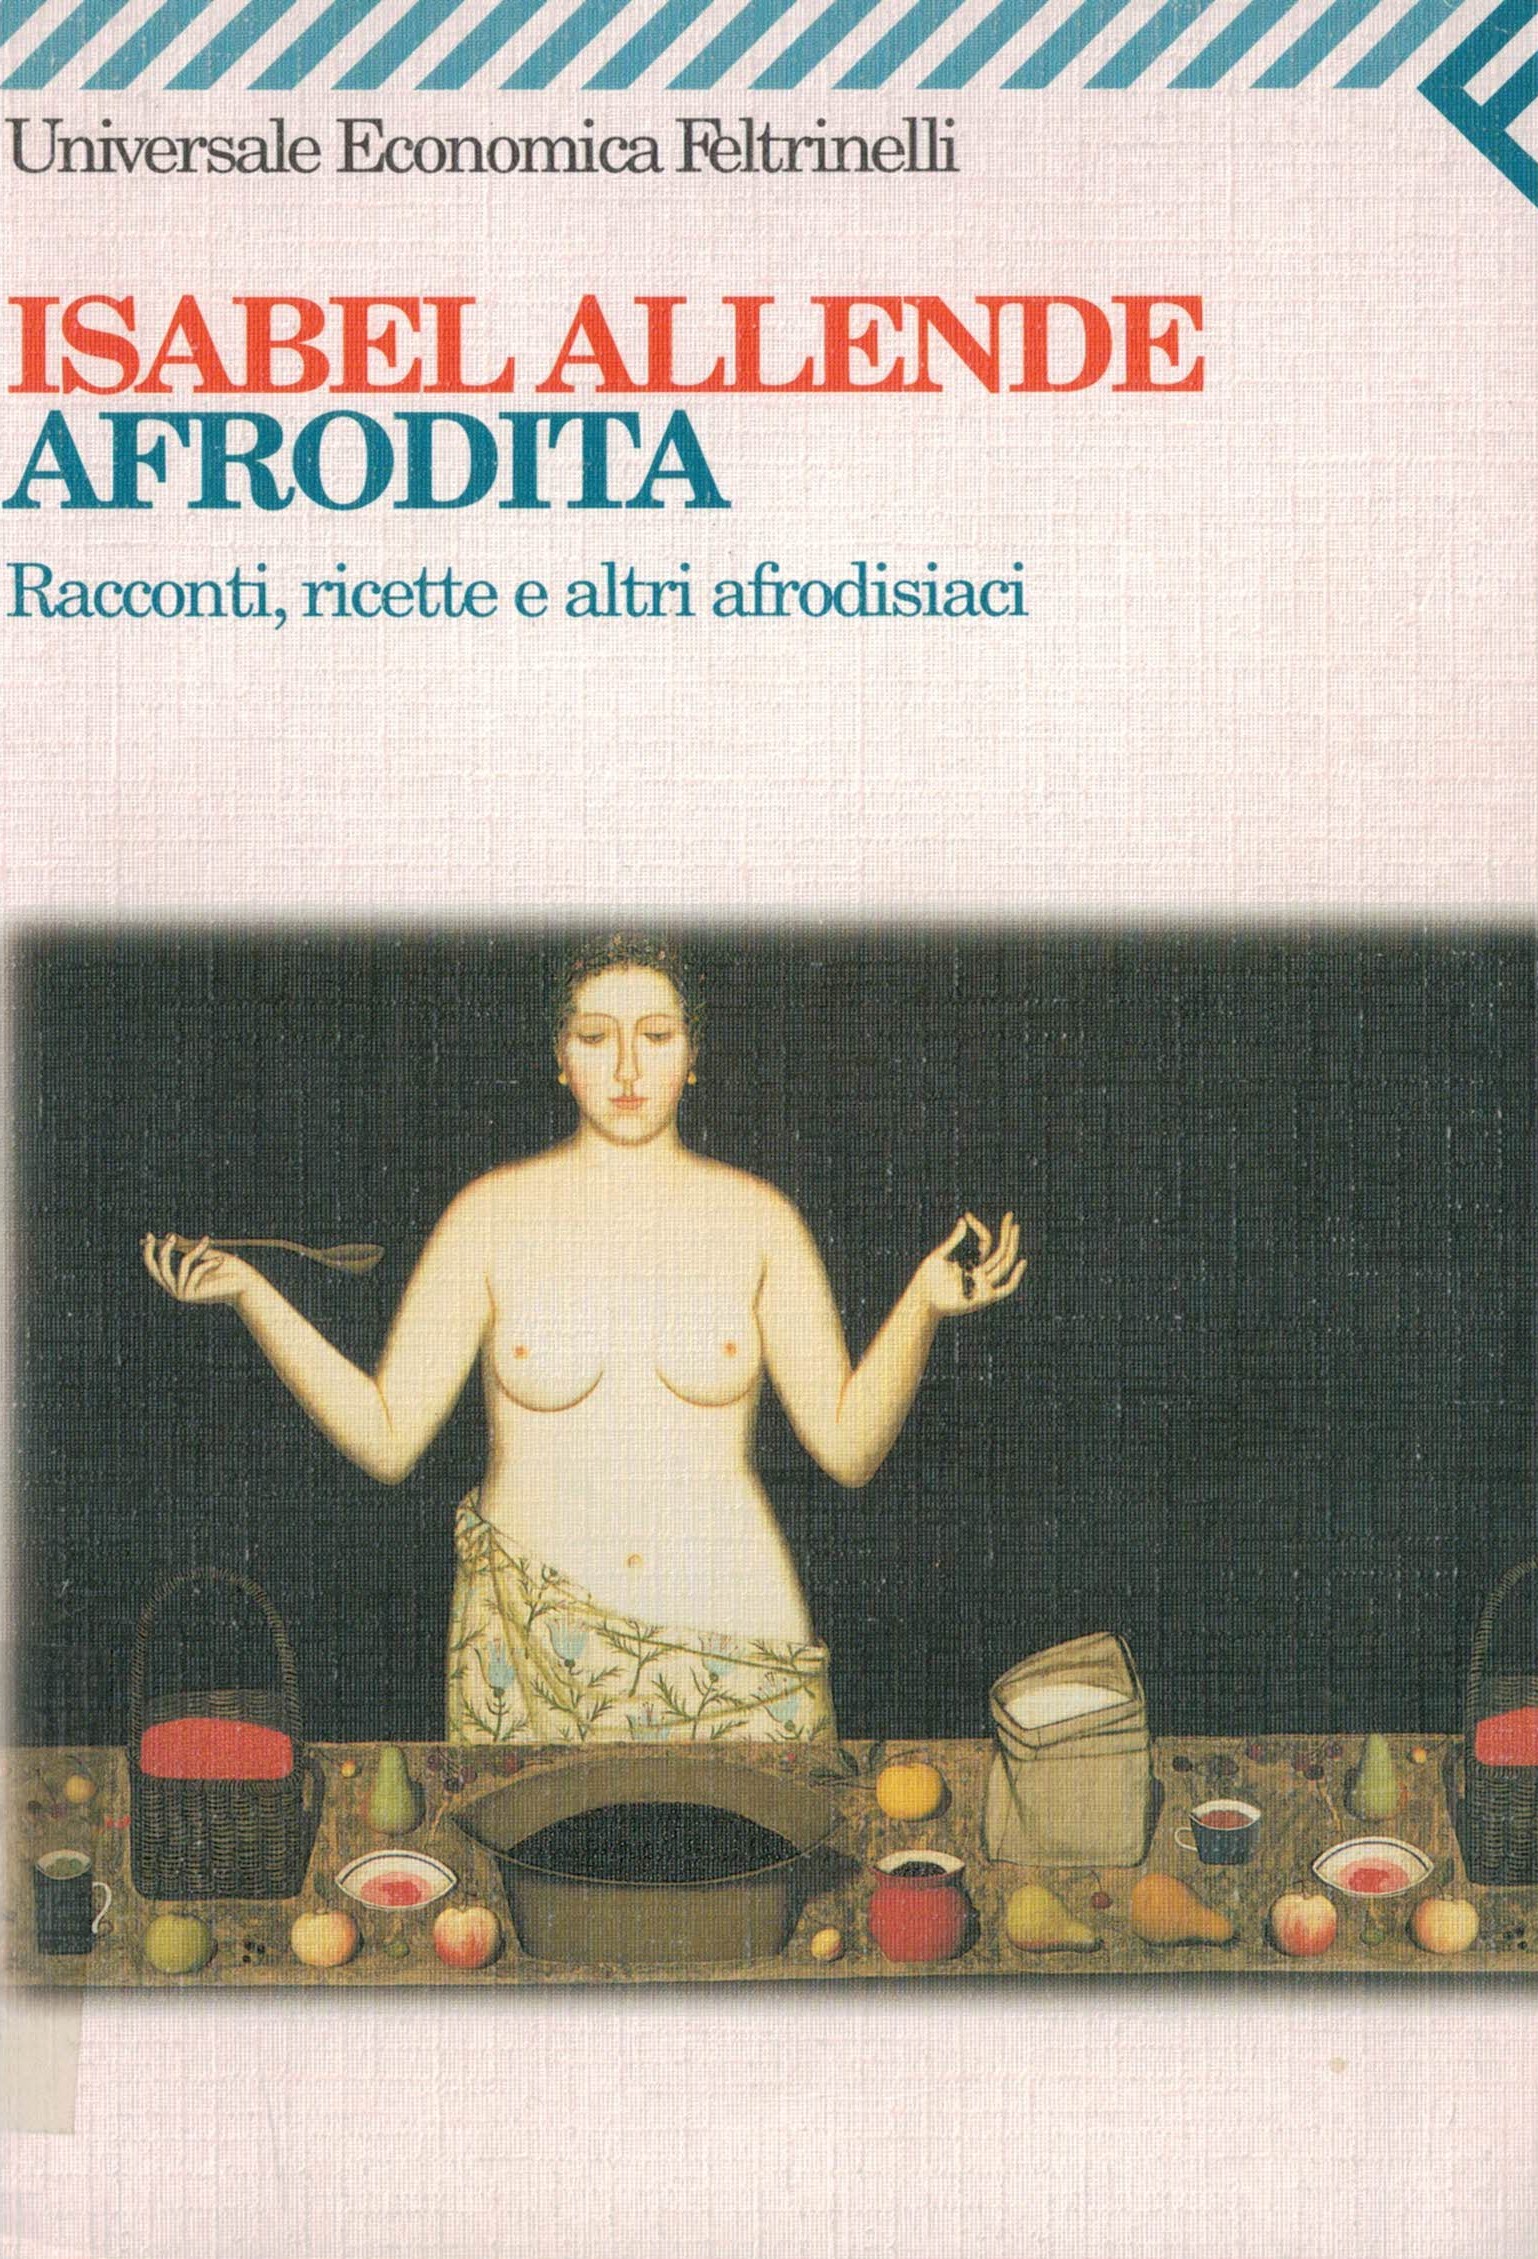 Copertina di Afrodita